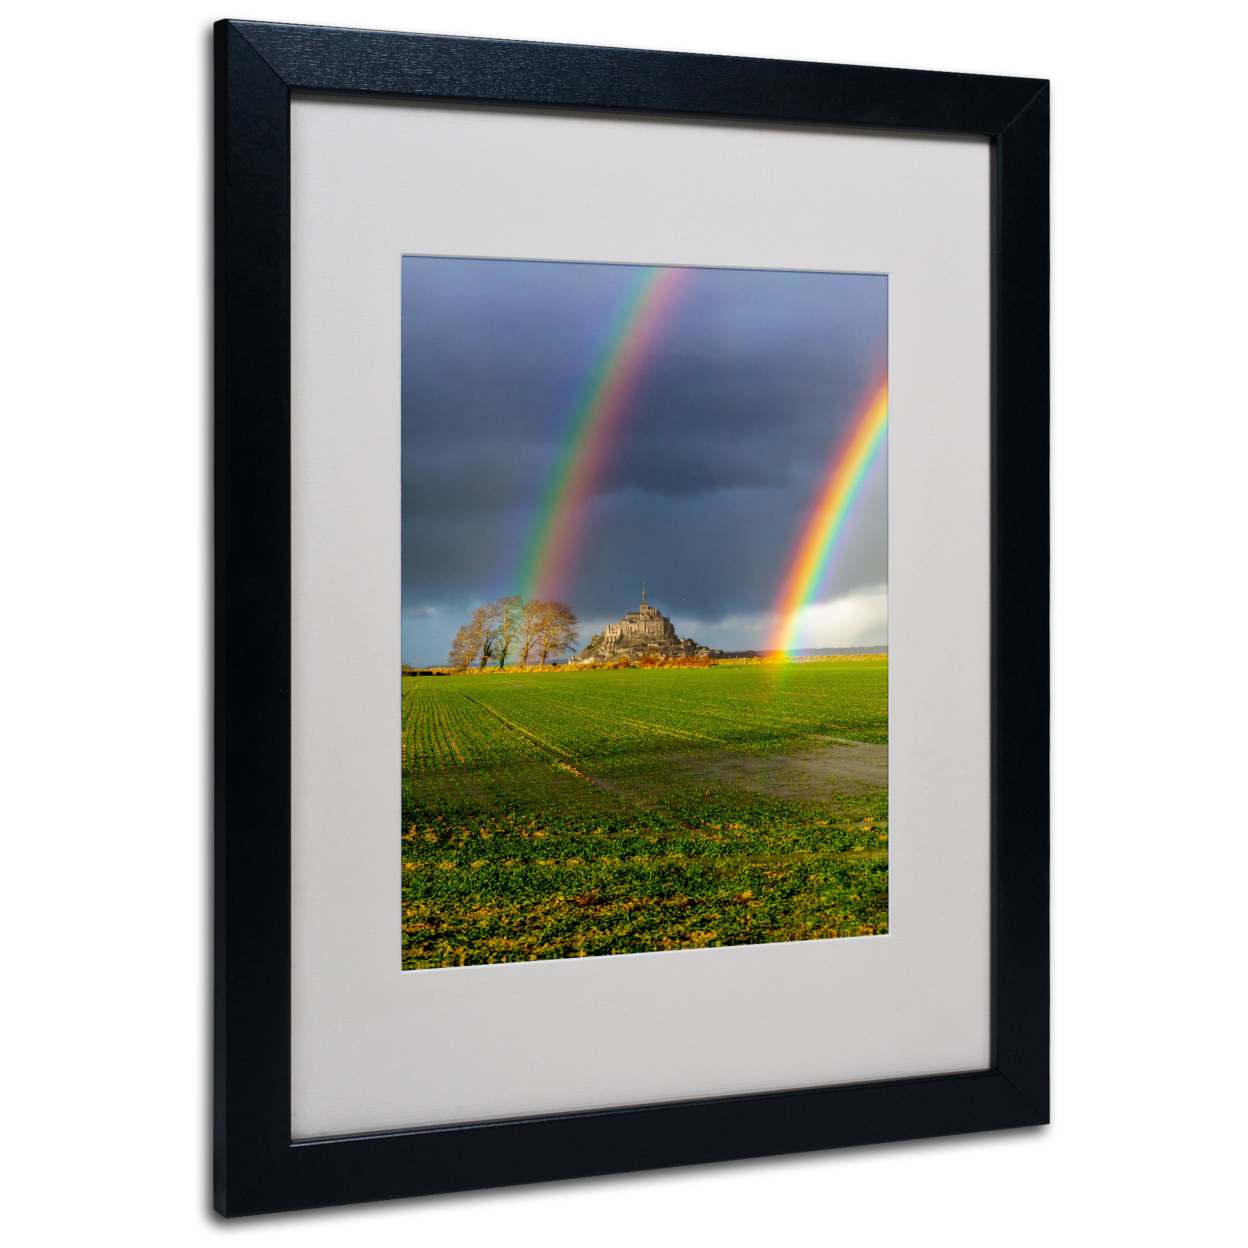 Mathieu Rivrin 'Double Rainbow' Black Wooden Framed Art 18 X 22 Inches